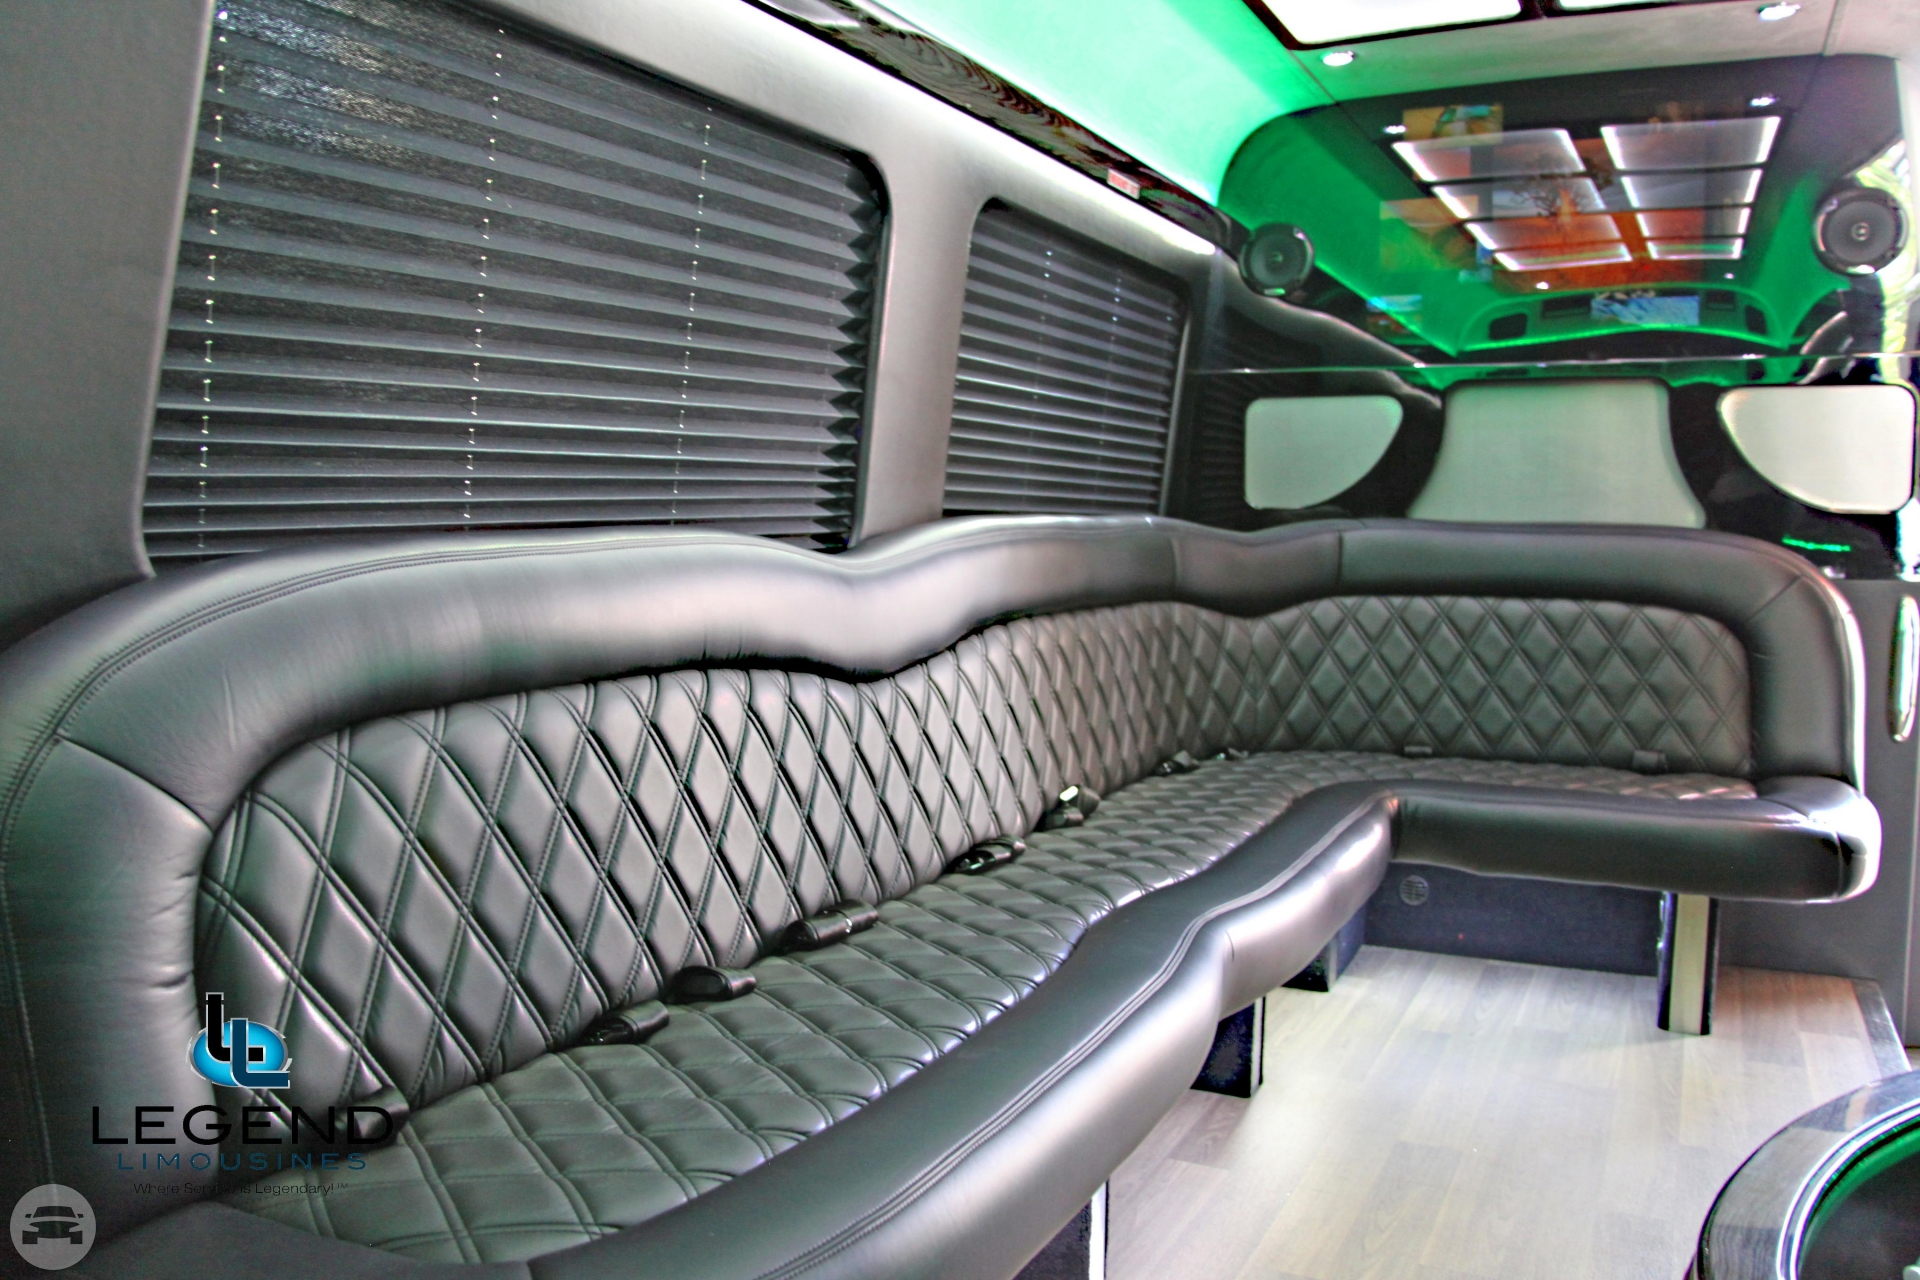 Mercedes Benz 12 Passenger Limo Bus
Van /
New York, NY

 / Hourly $0.00
